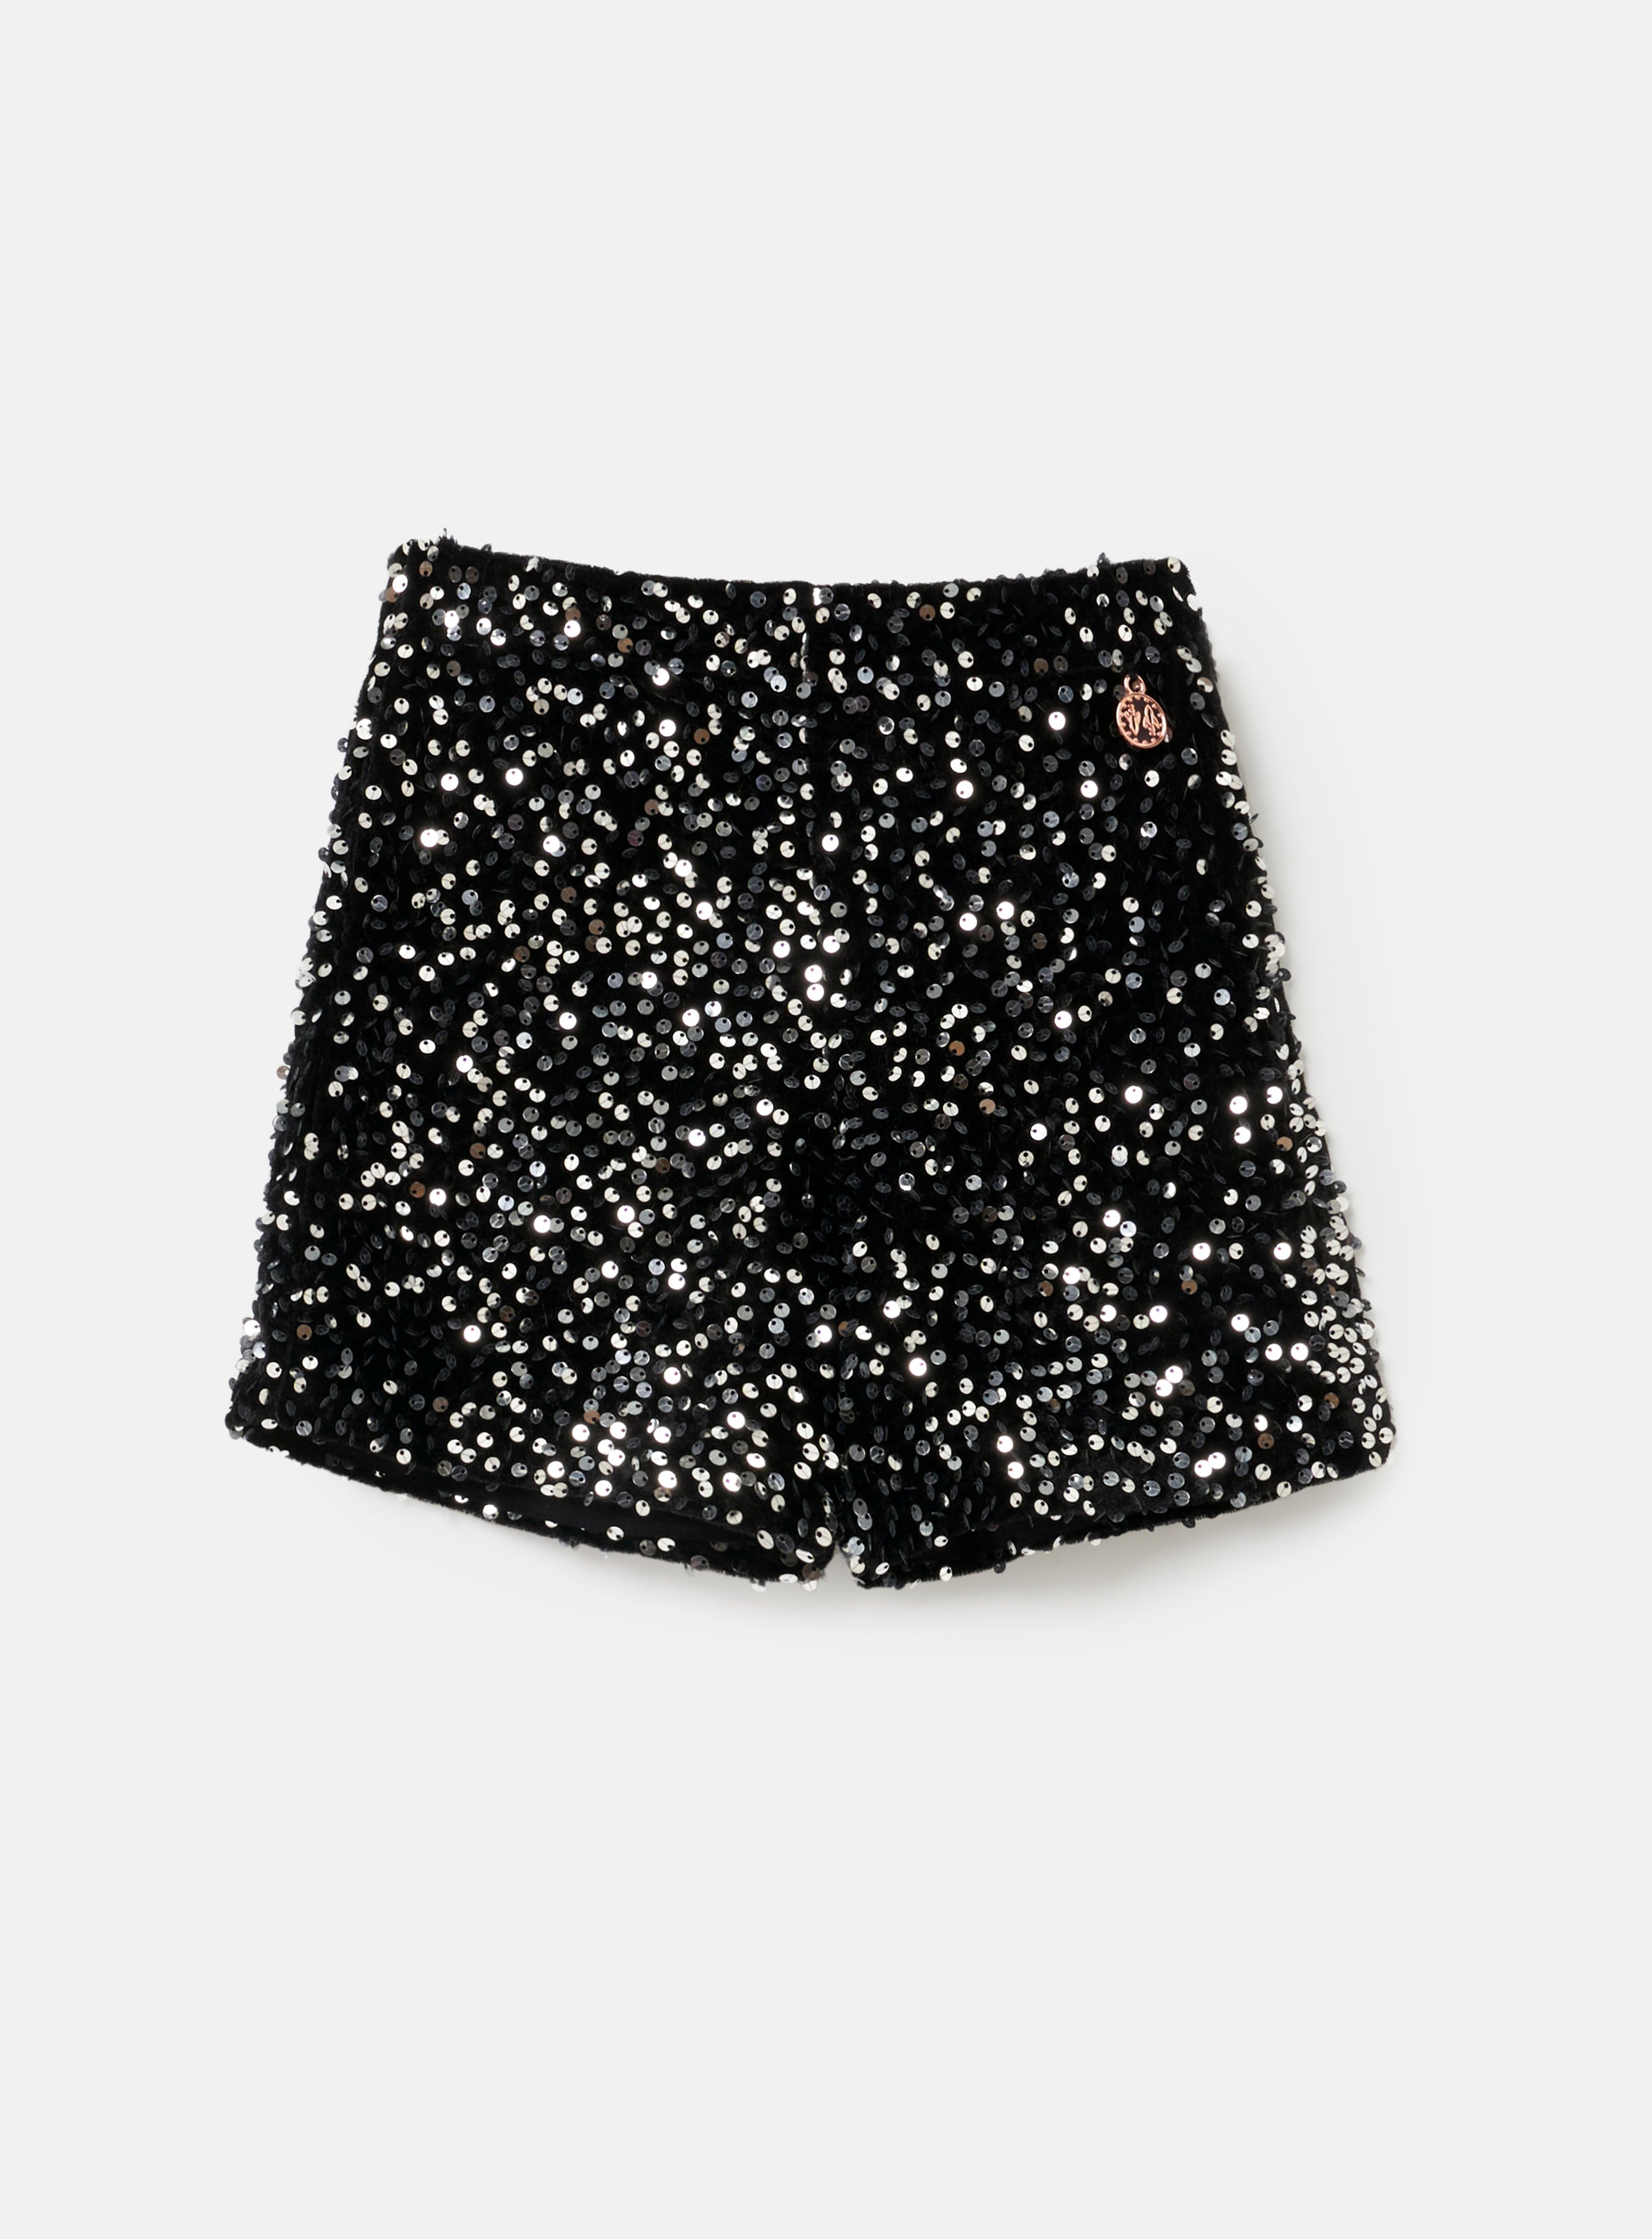 Girls Sequin Embellished Black Velvet Shorts